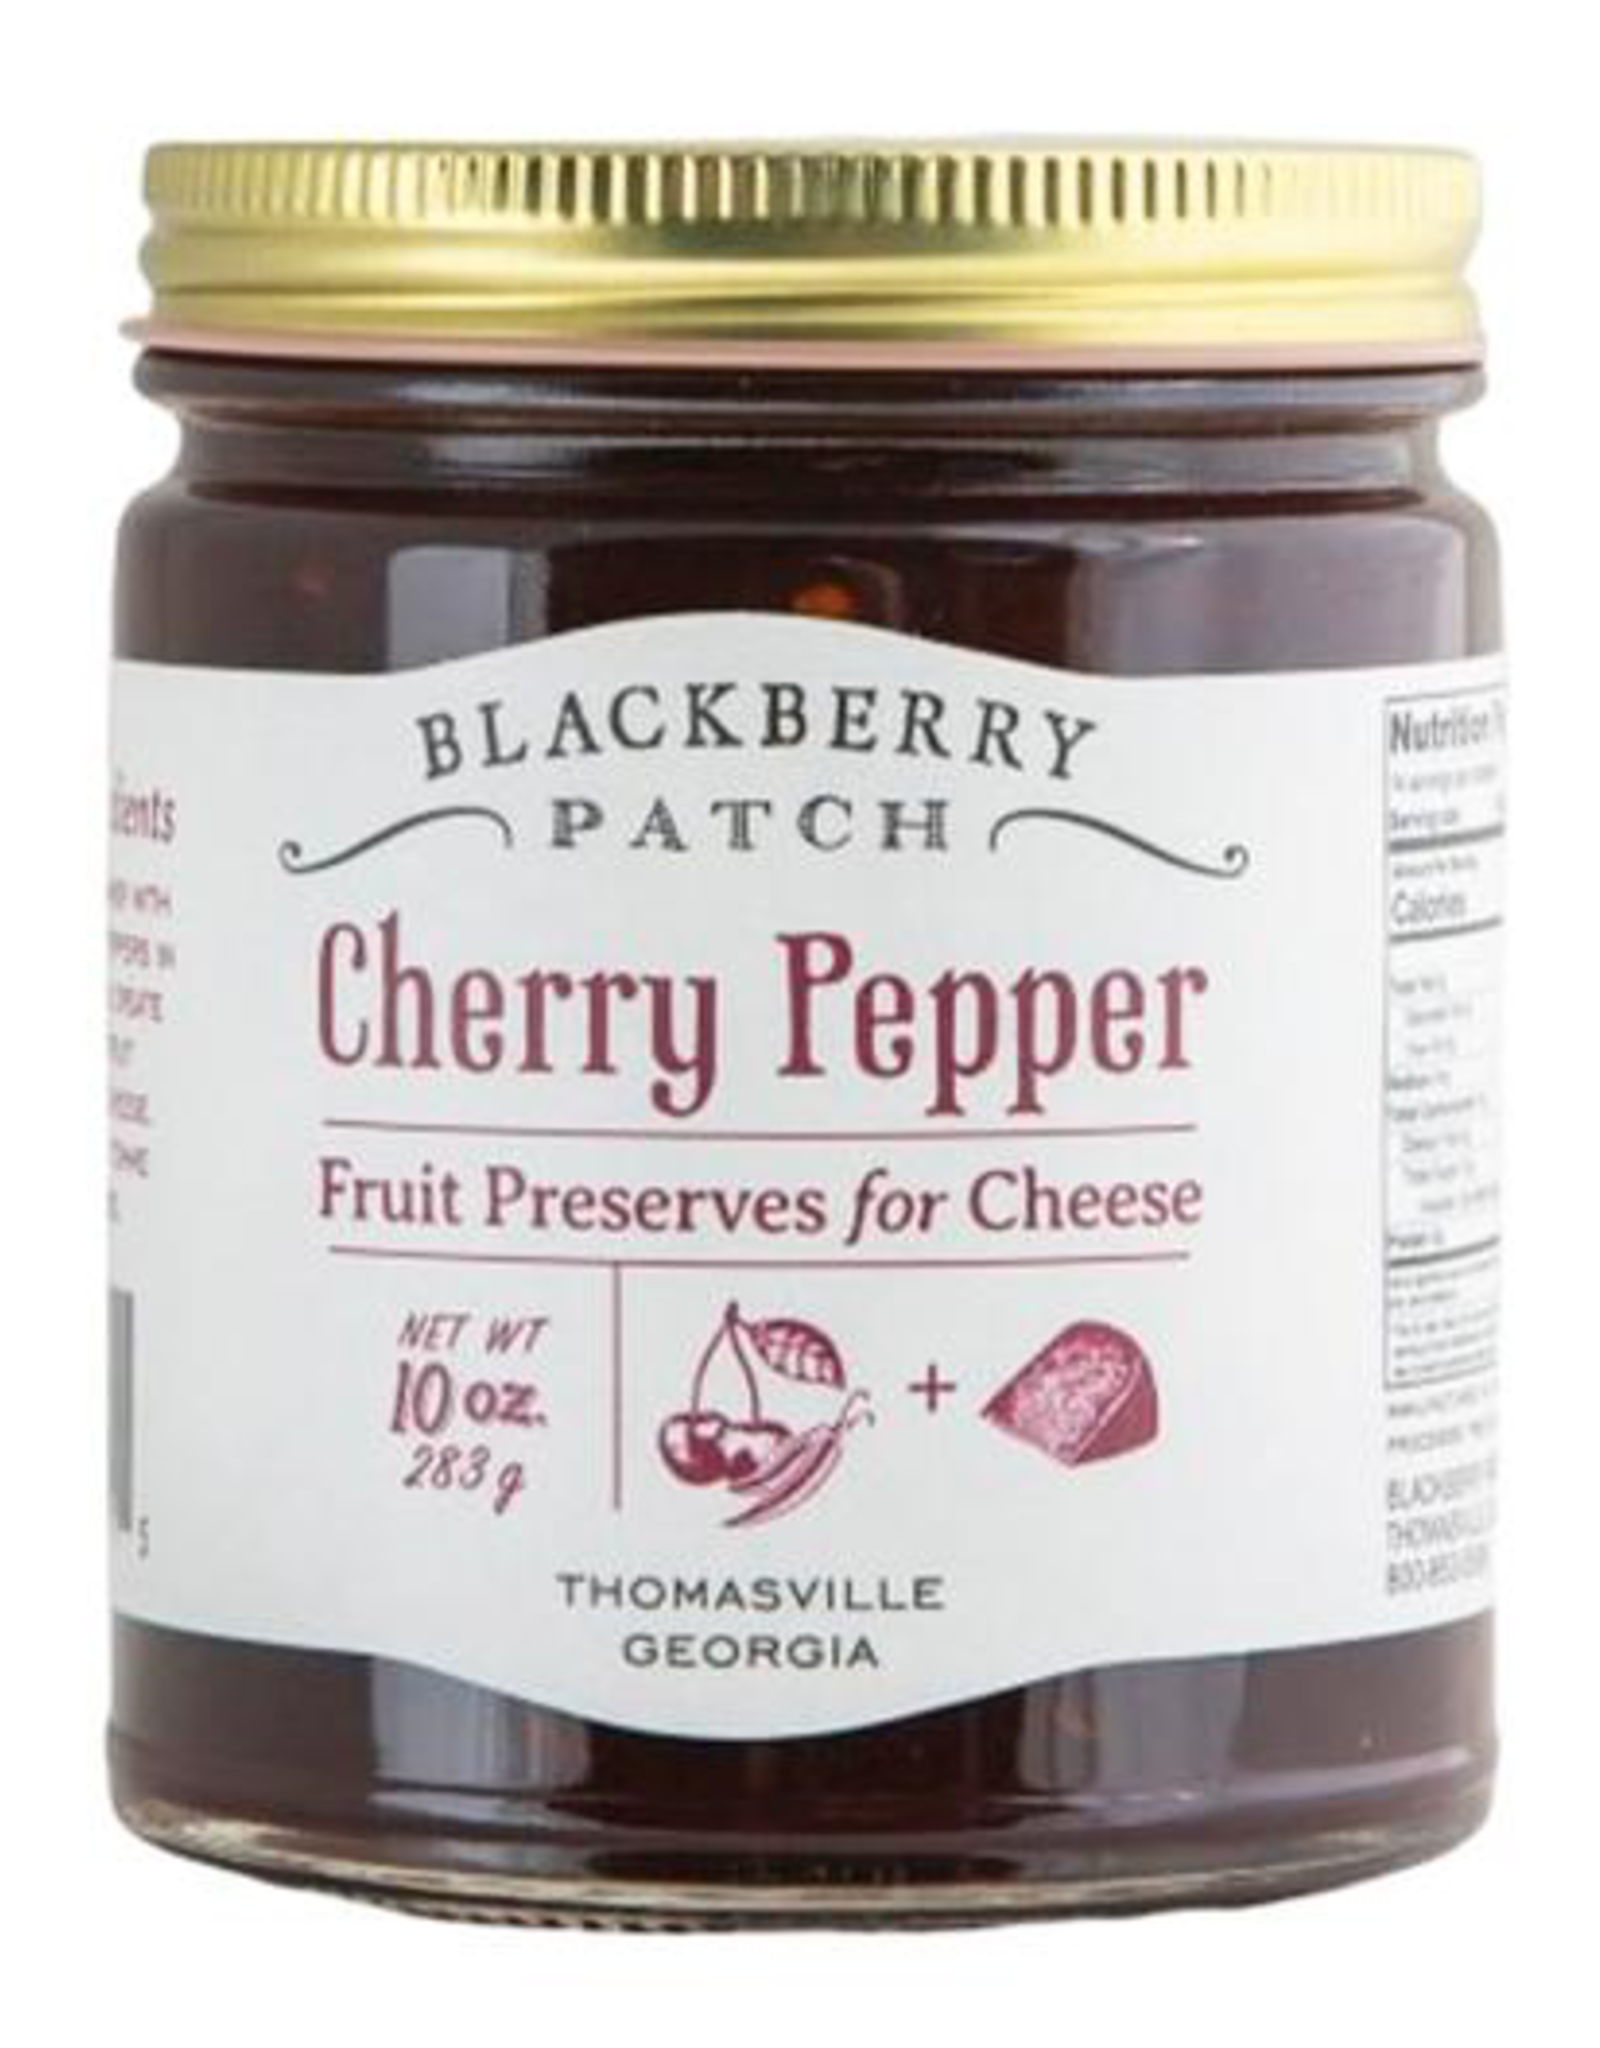 Food & Beverage Blackberry Patch - Cherry Pepper Fruit Preserves